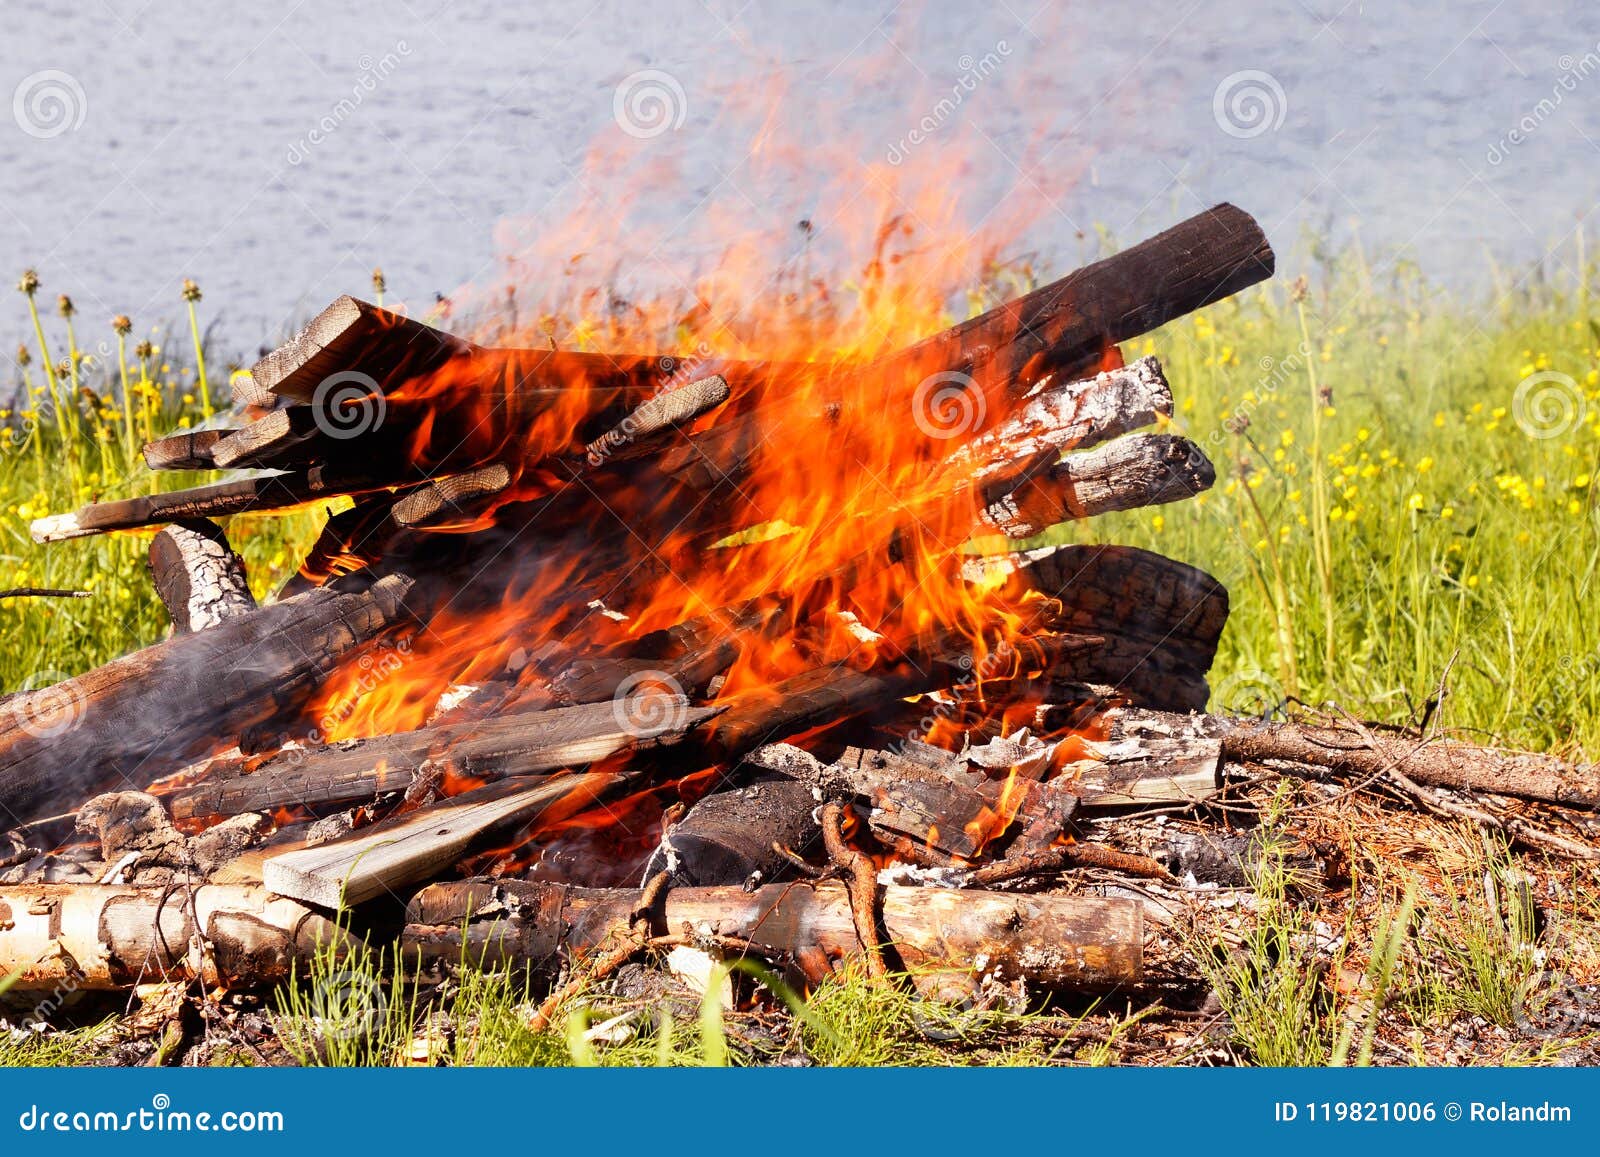 Lake side campfire stock photo. Image of campfire, burning - 119821006